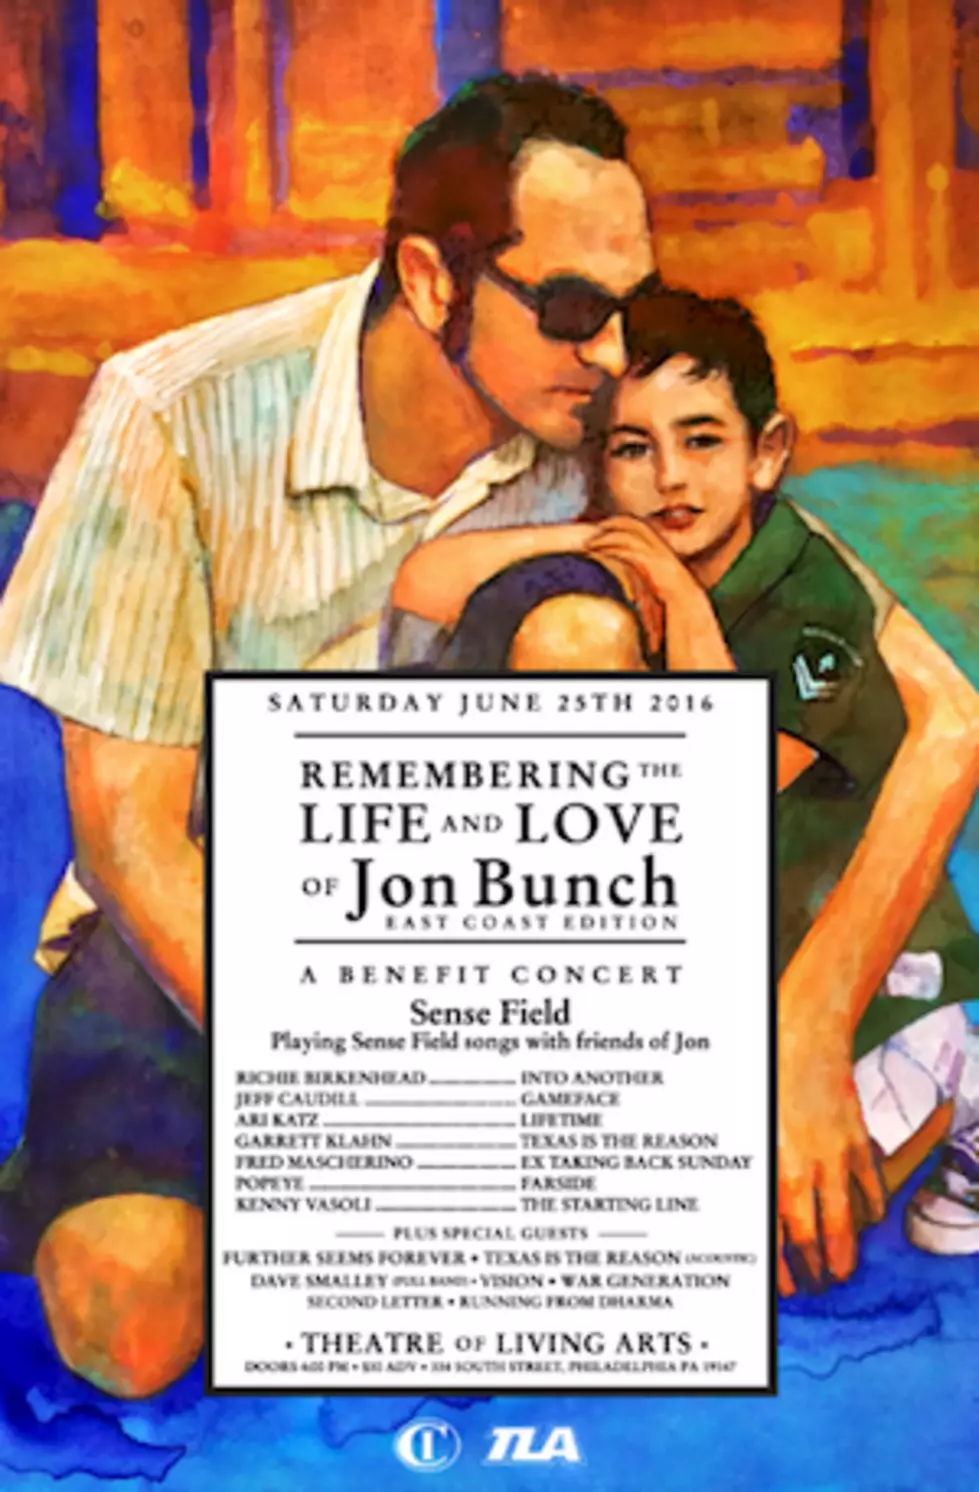 Further Seems Forever, Members of Sense Field Lead Jon Bunch Memorial Show in Philadelphia